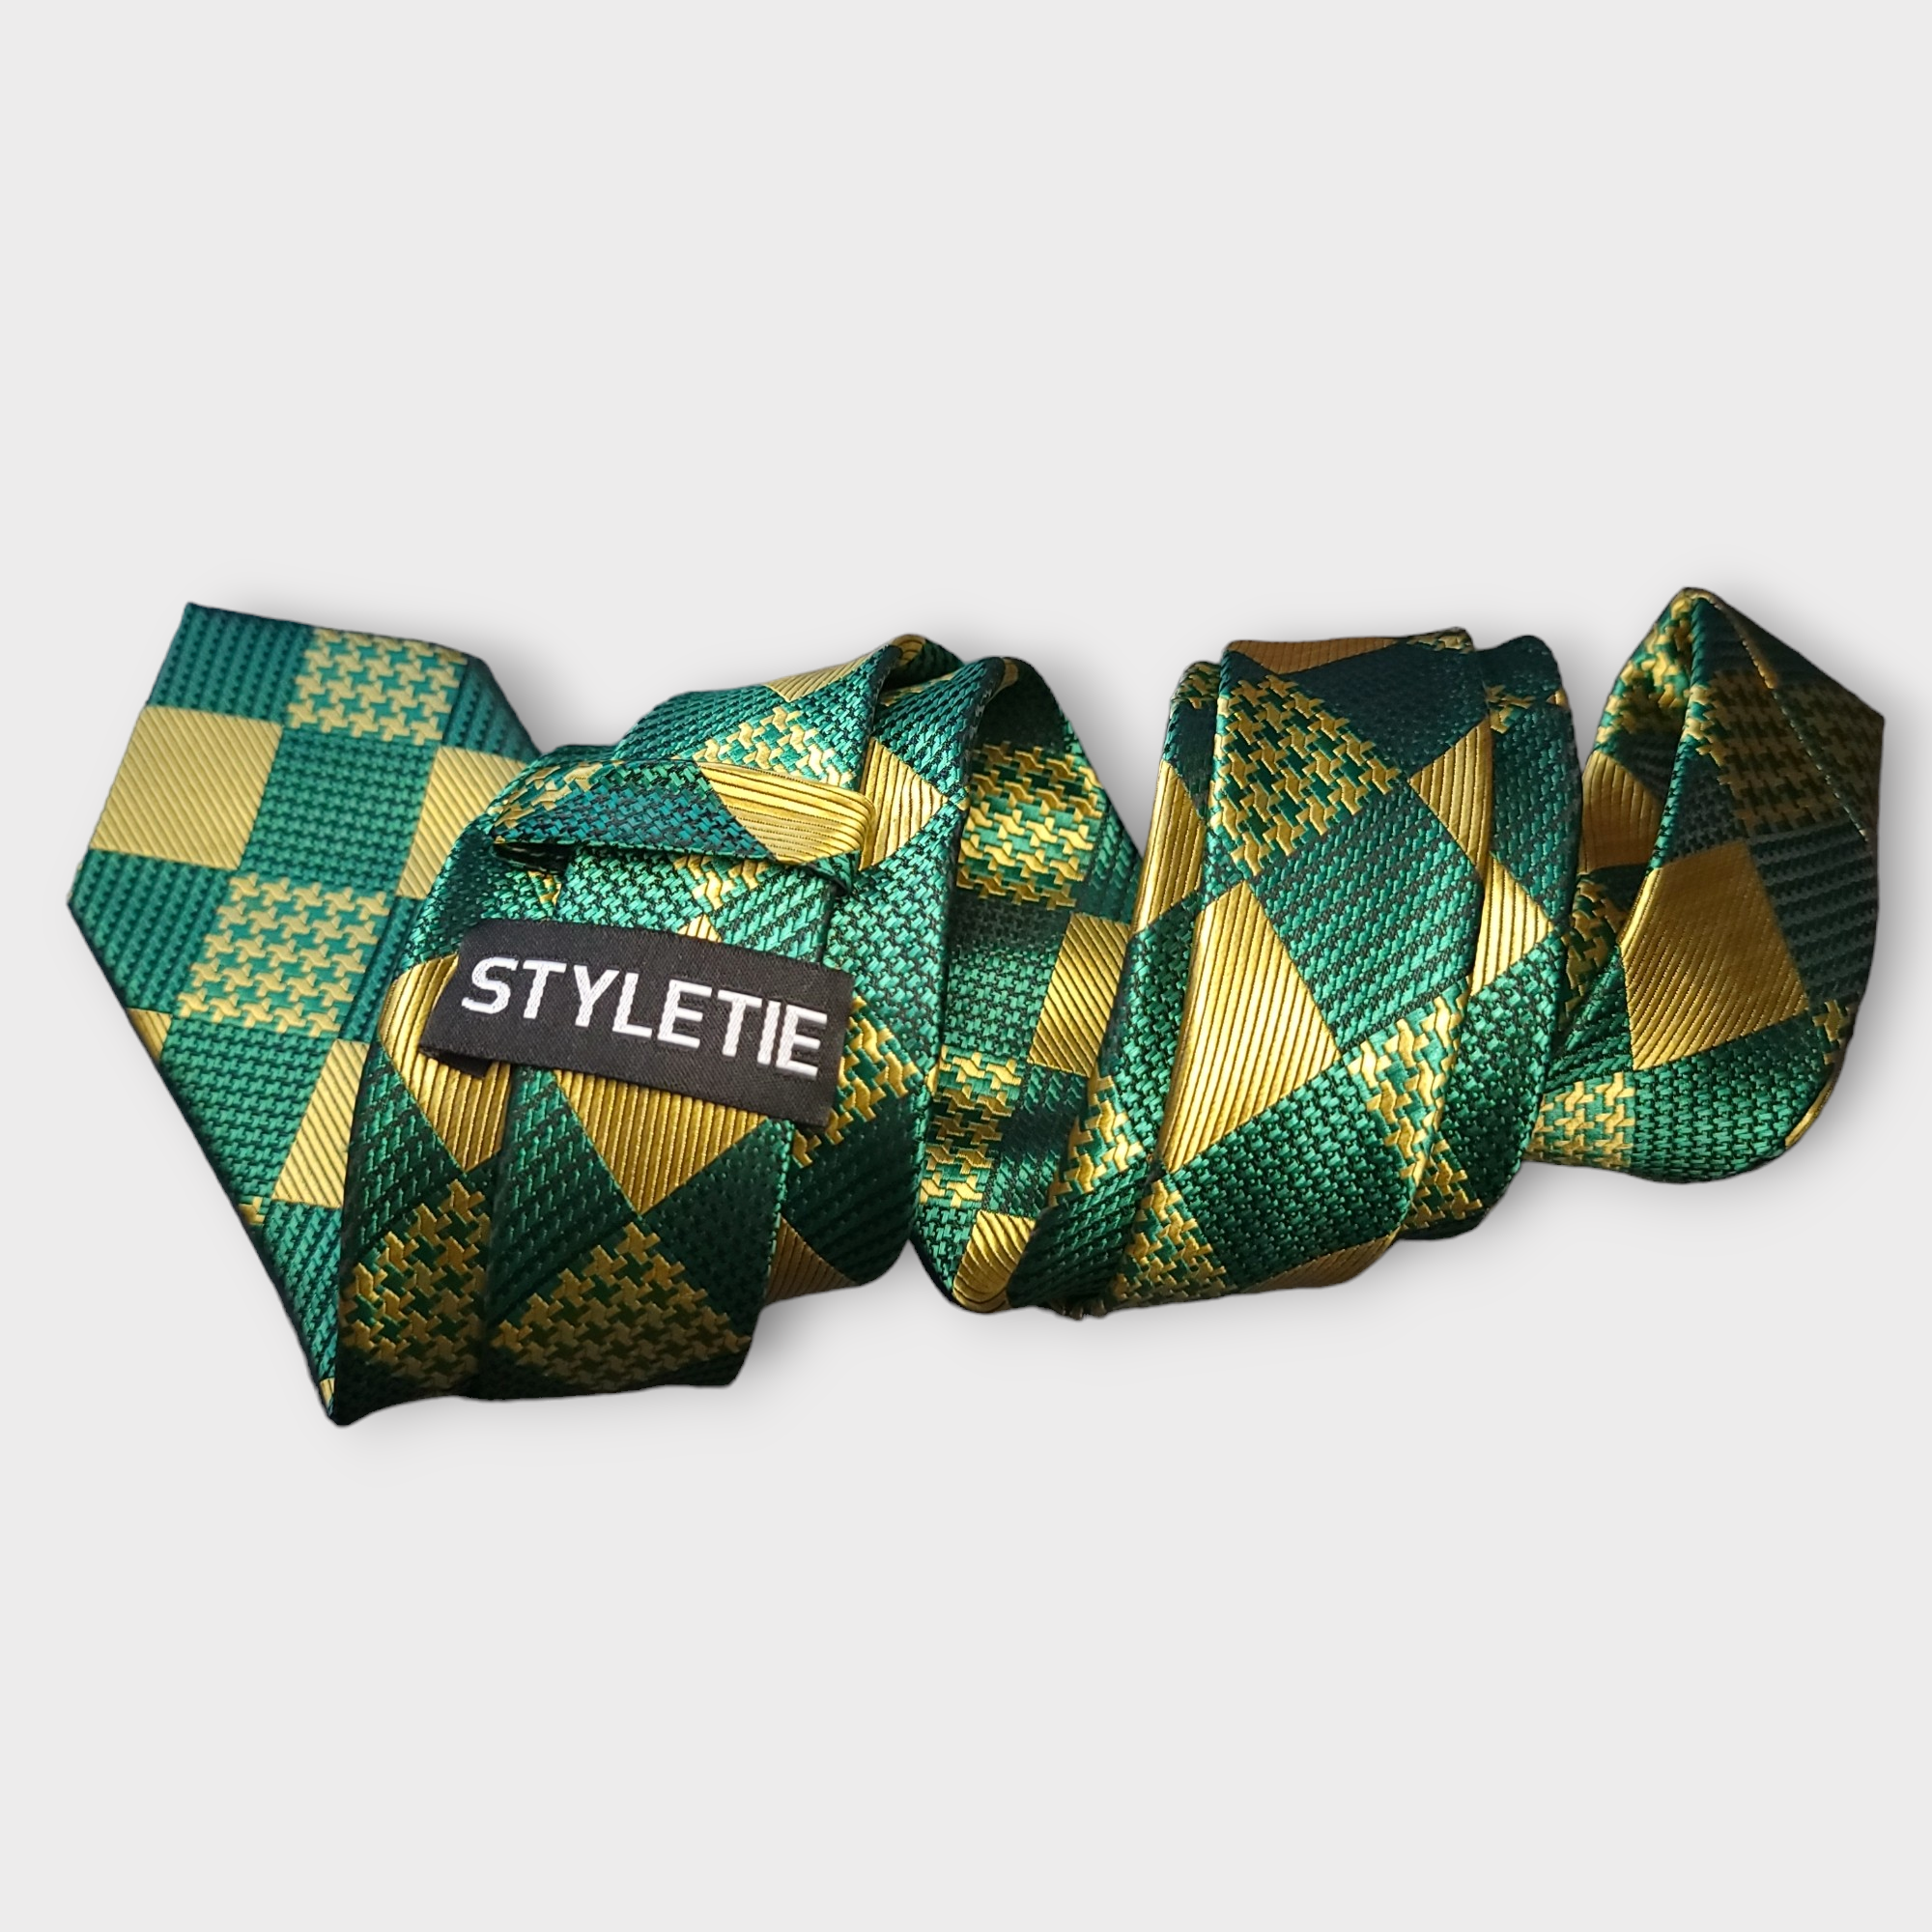 Green Gold Plaid Silk Tie Pocket Square Cufflink Set